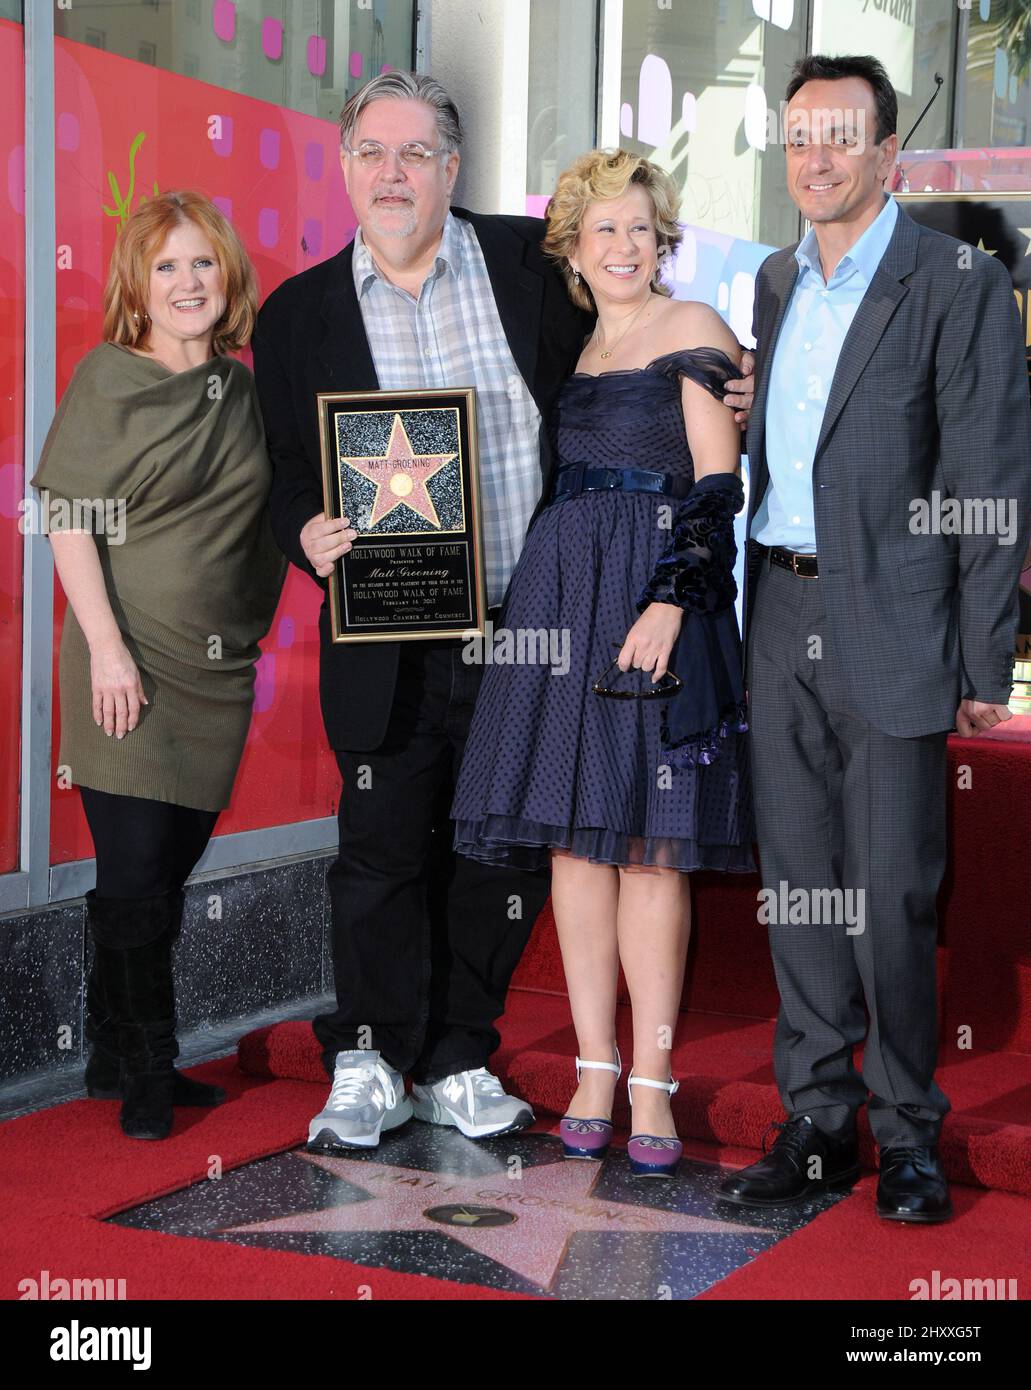 Nancy Cartwright, Matt Groening, Yeardley Smith, Hank Azaria attending Matt Groening's star ceremony in Hollywood in Los Angeles, USA. Stock Photo